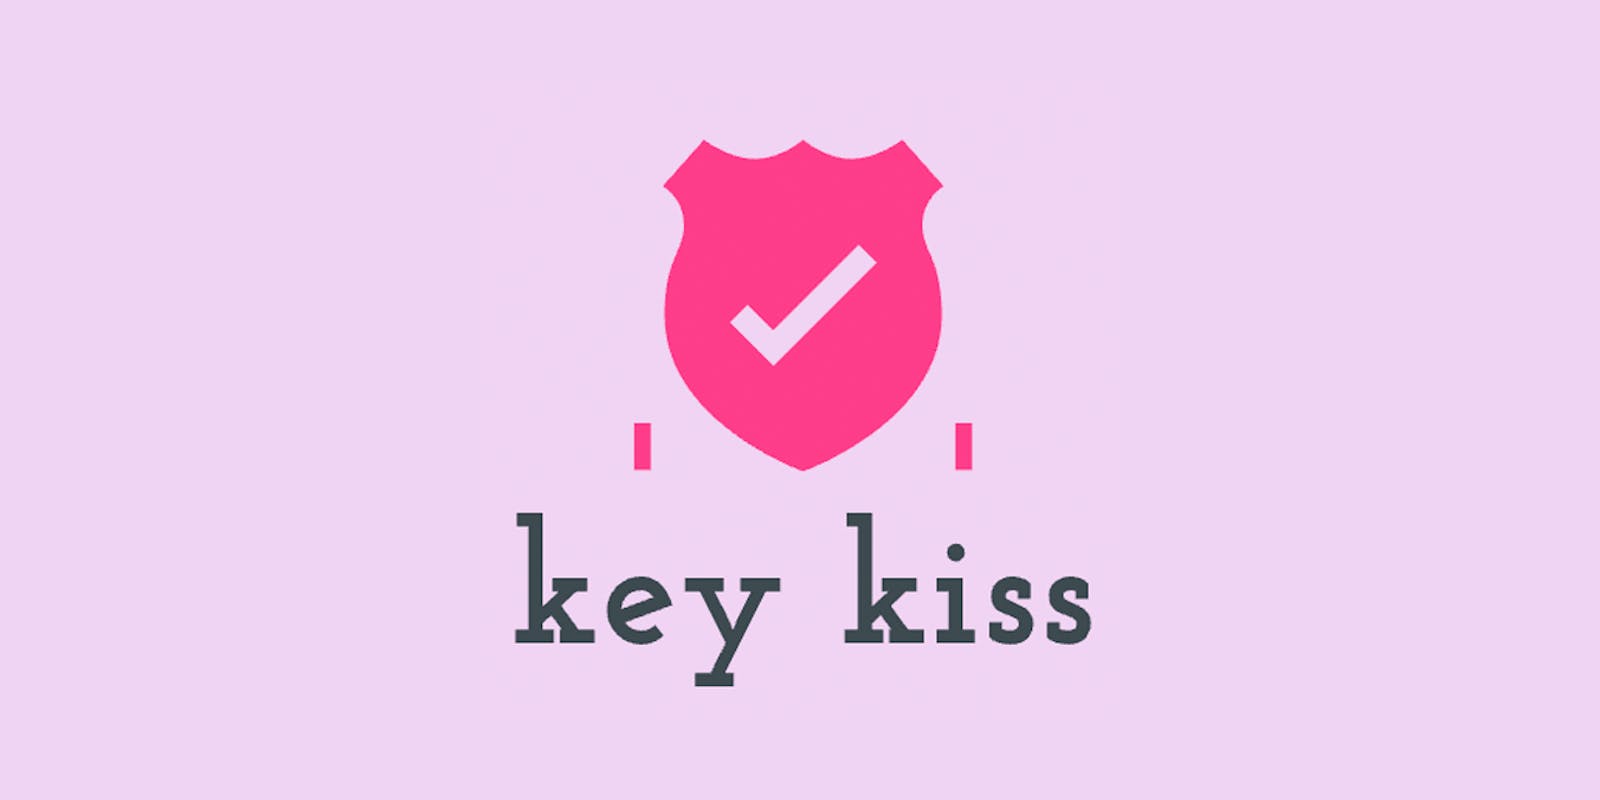 key-kiss (key keep it safe/secure)